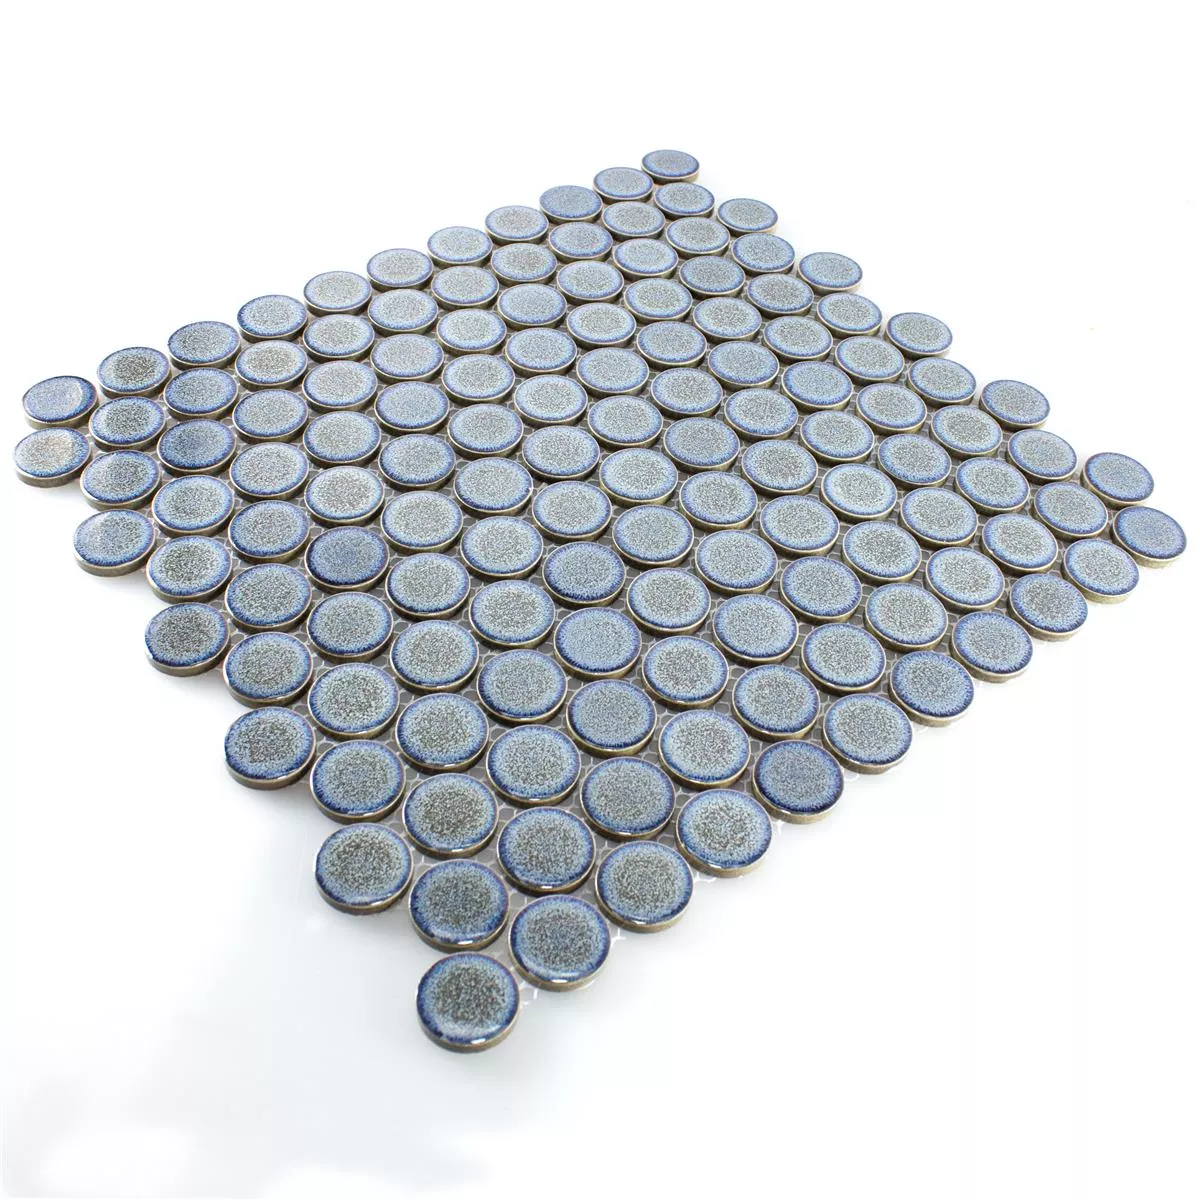 Muster von Keramik Knopf Mosaikfliesen Mission Blaugrau